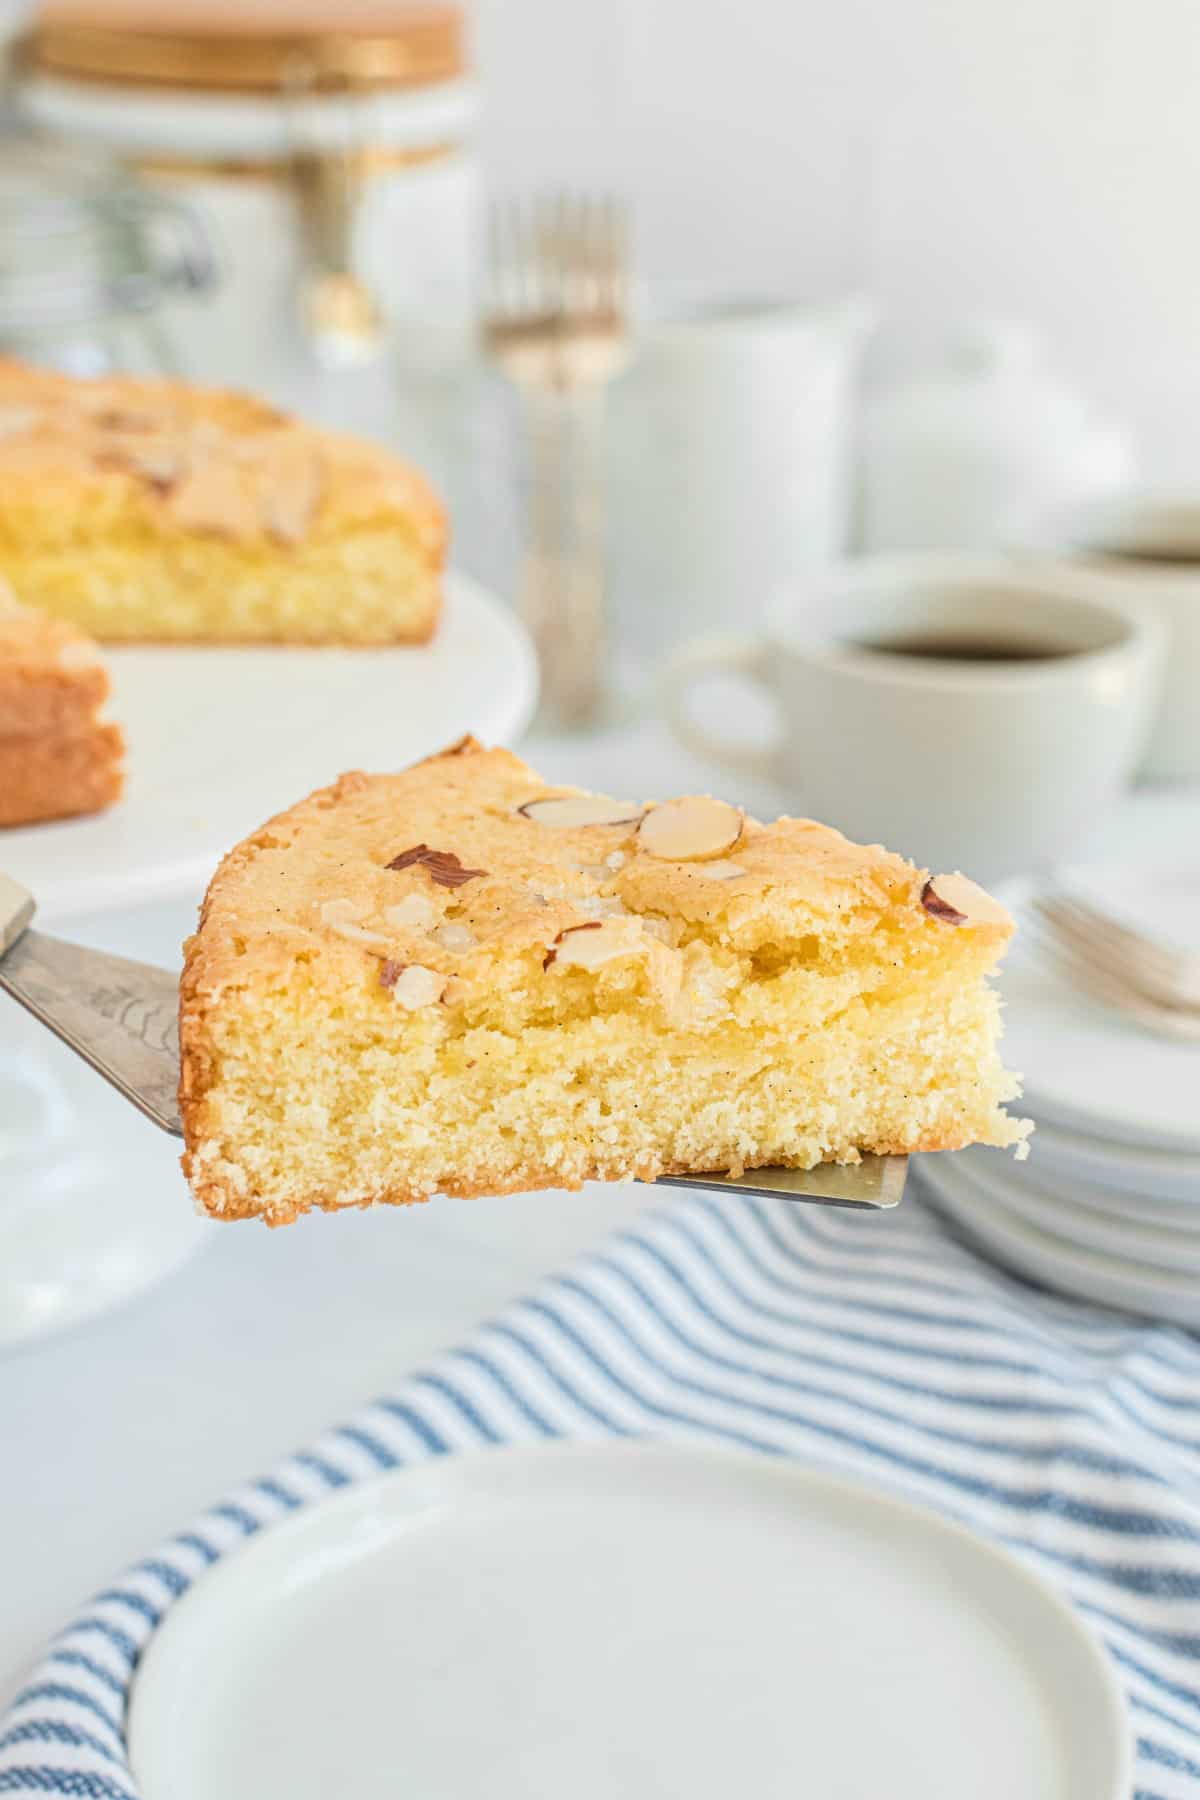 Swedish Almond Cake Recipe - Shugary Sweets